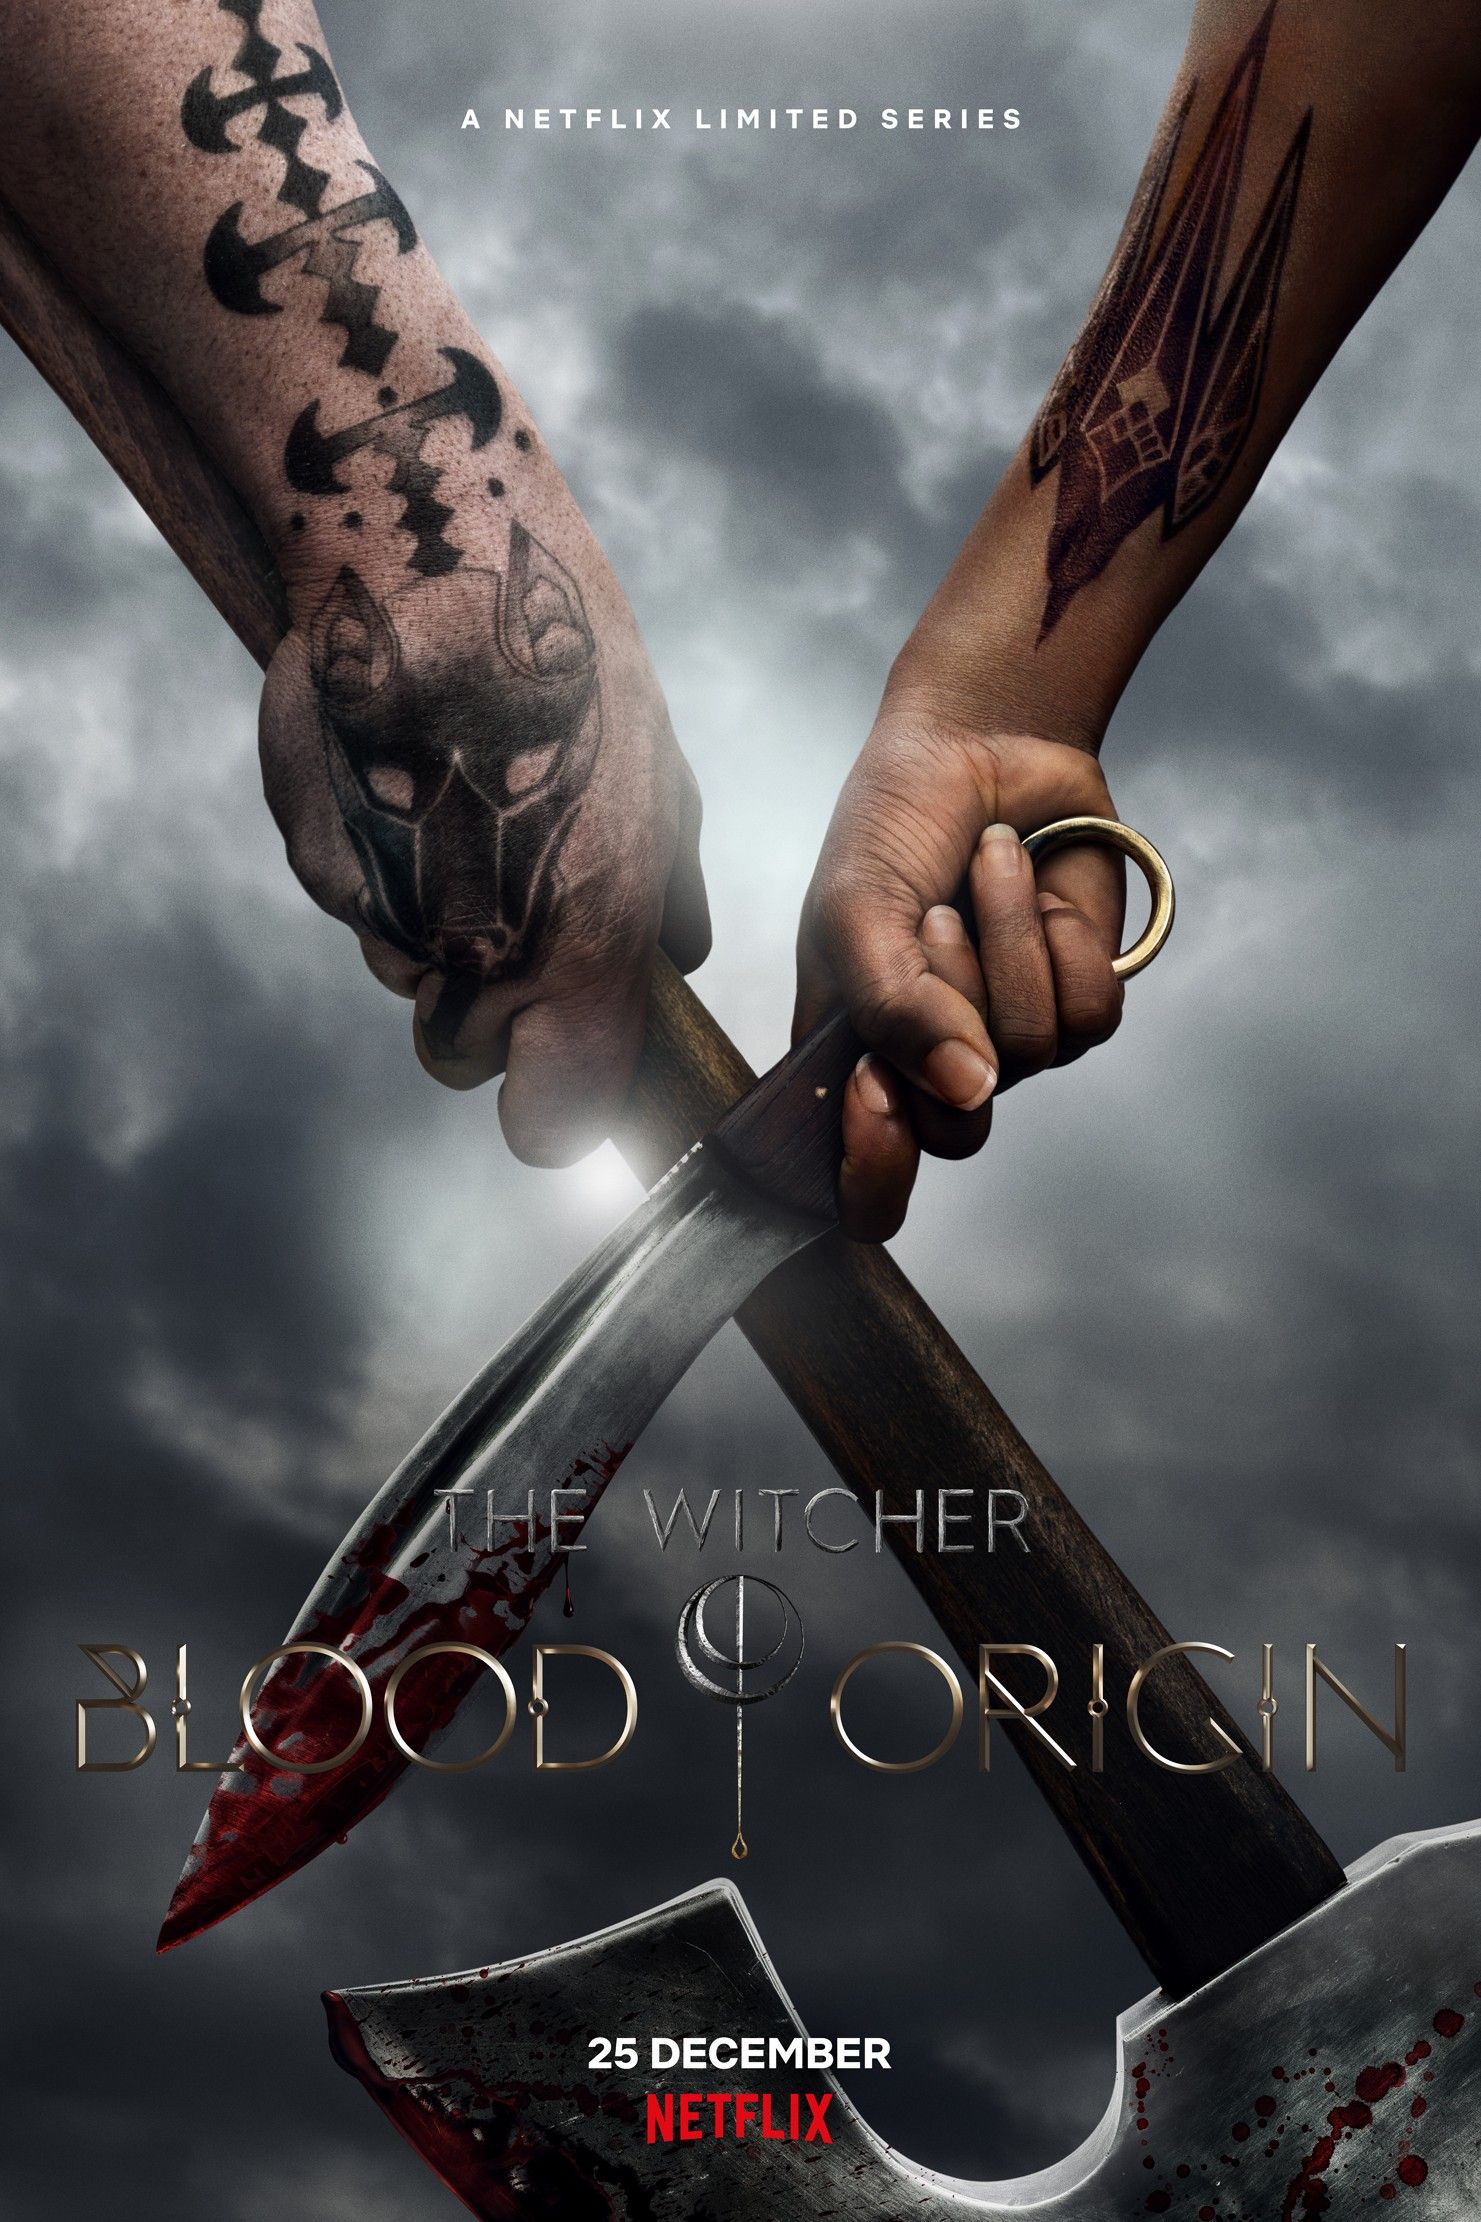 The Witcher Blood Origin Teaser Poster